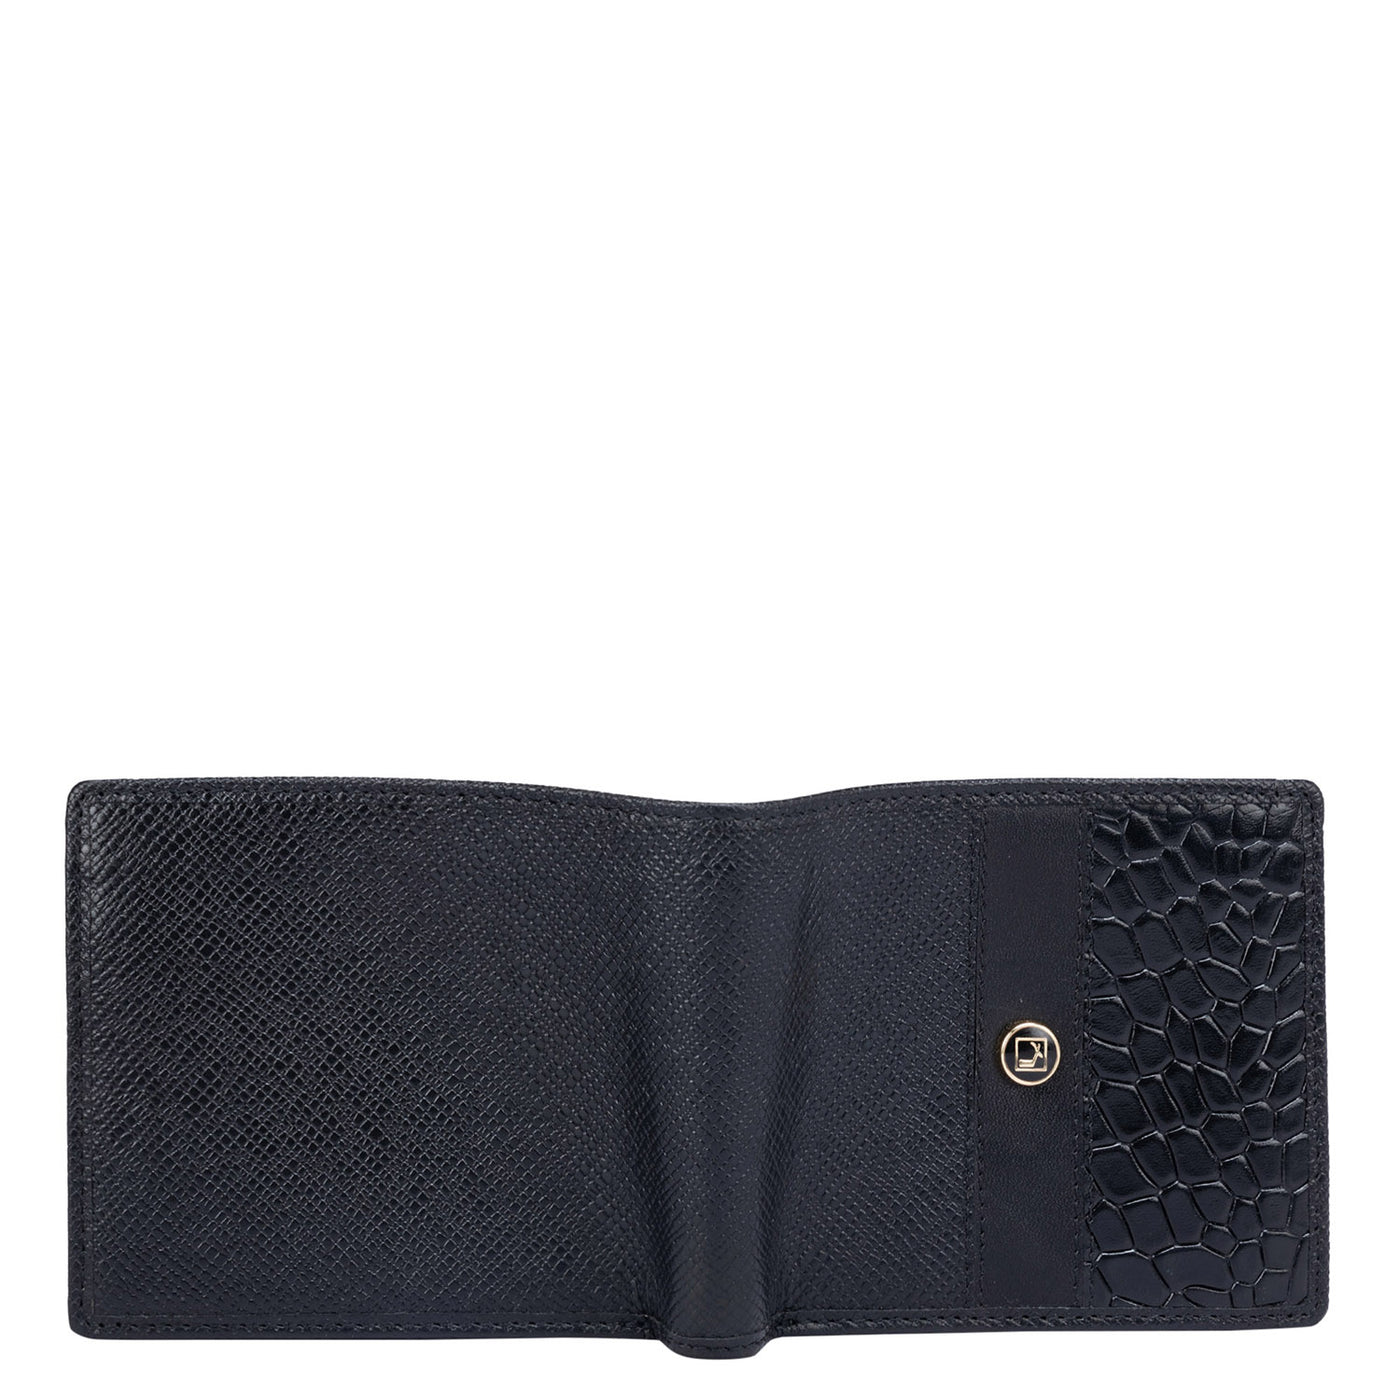 Franzy Croco Leather Mens Wallet - Black